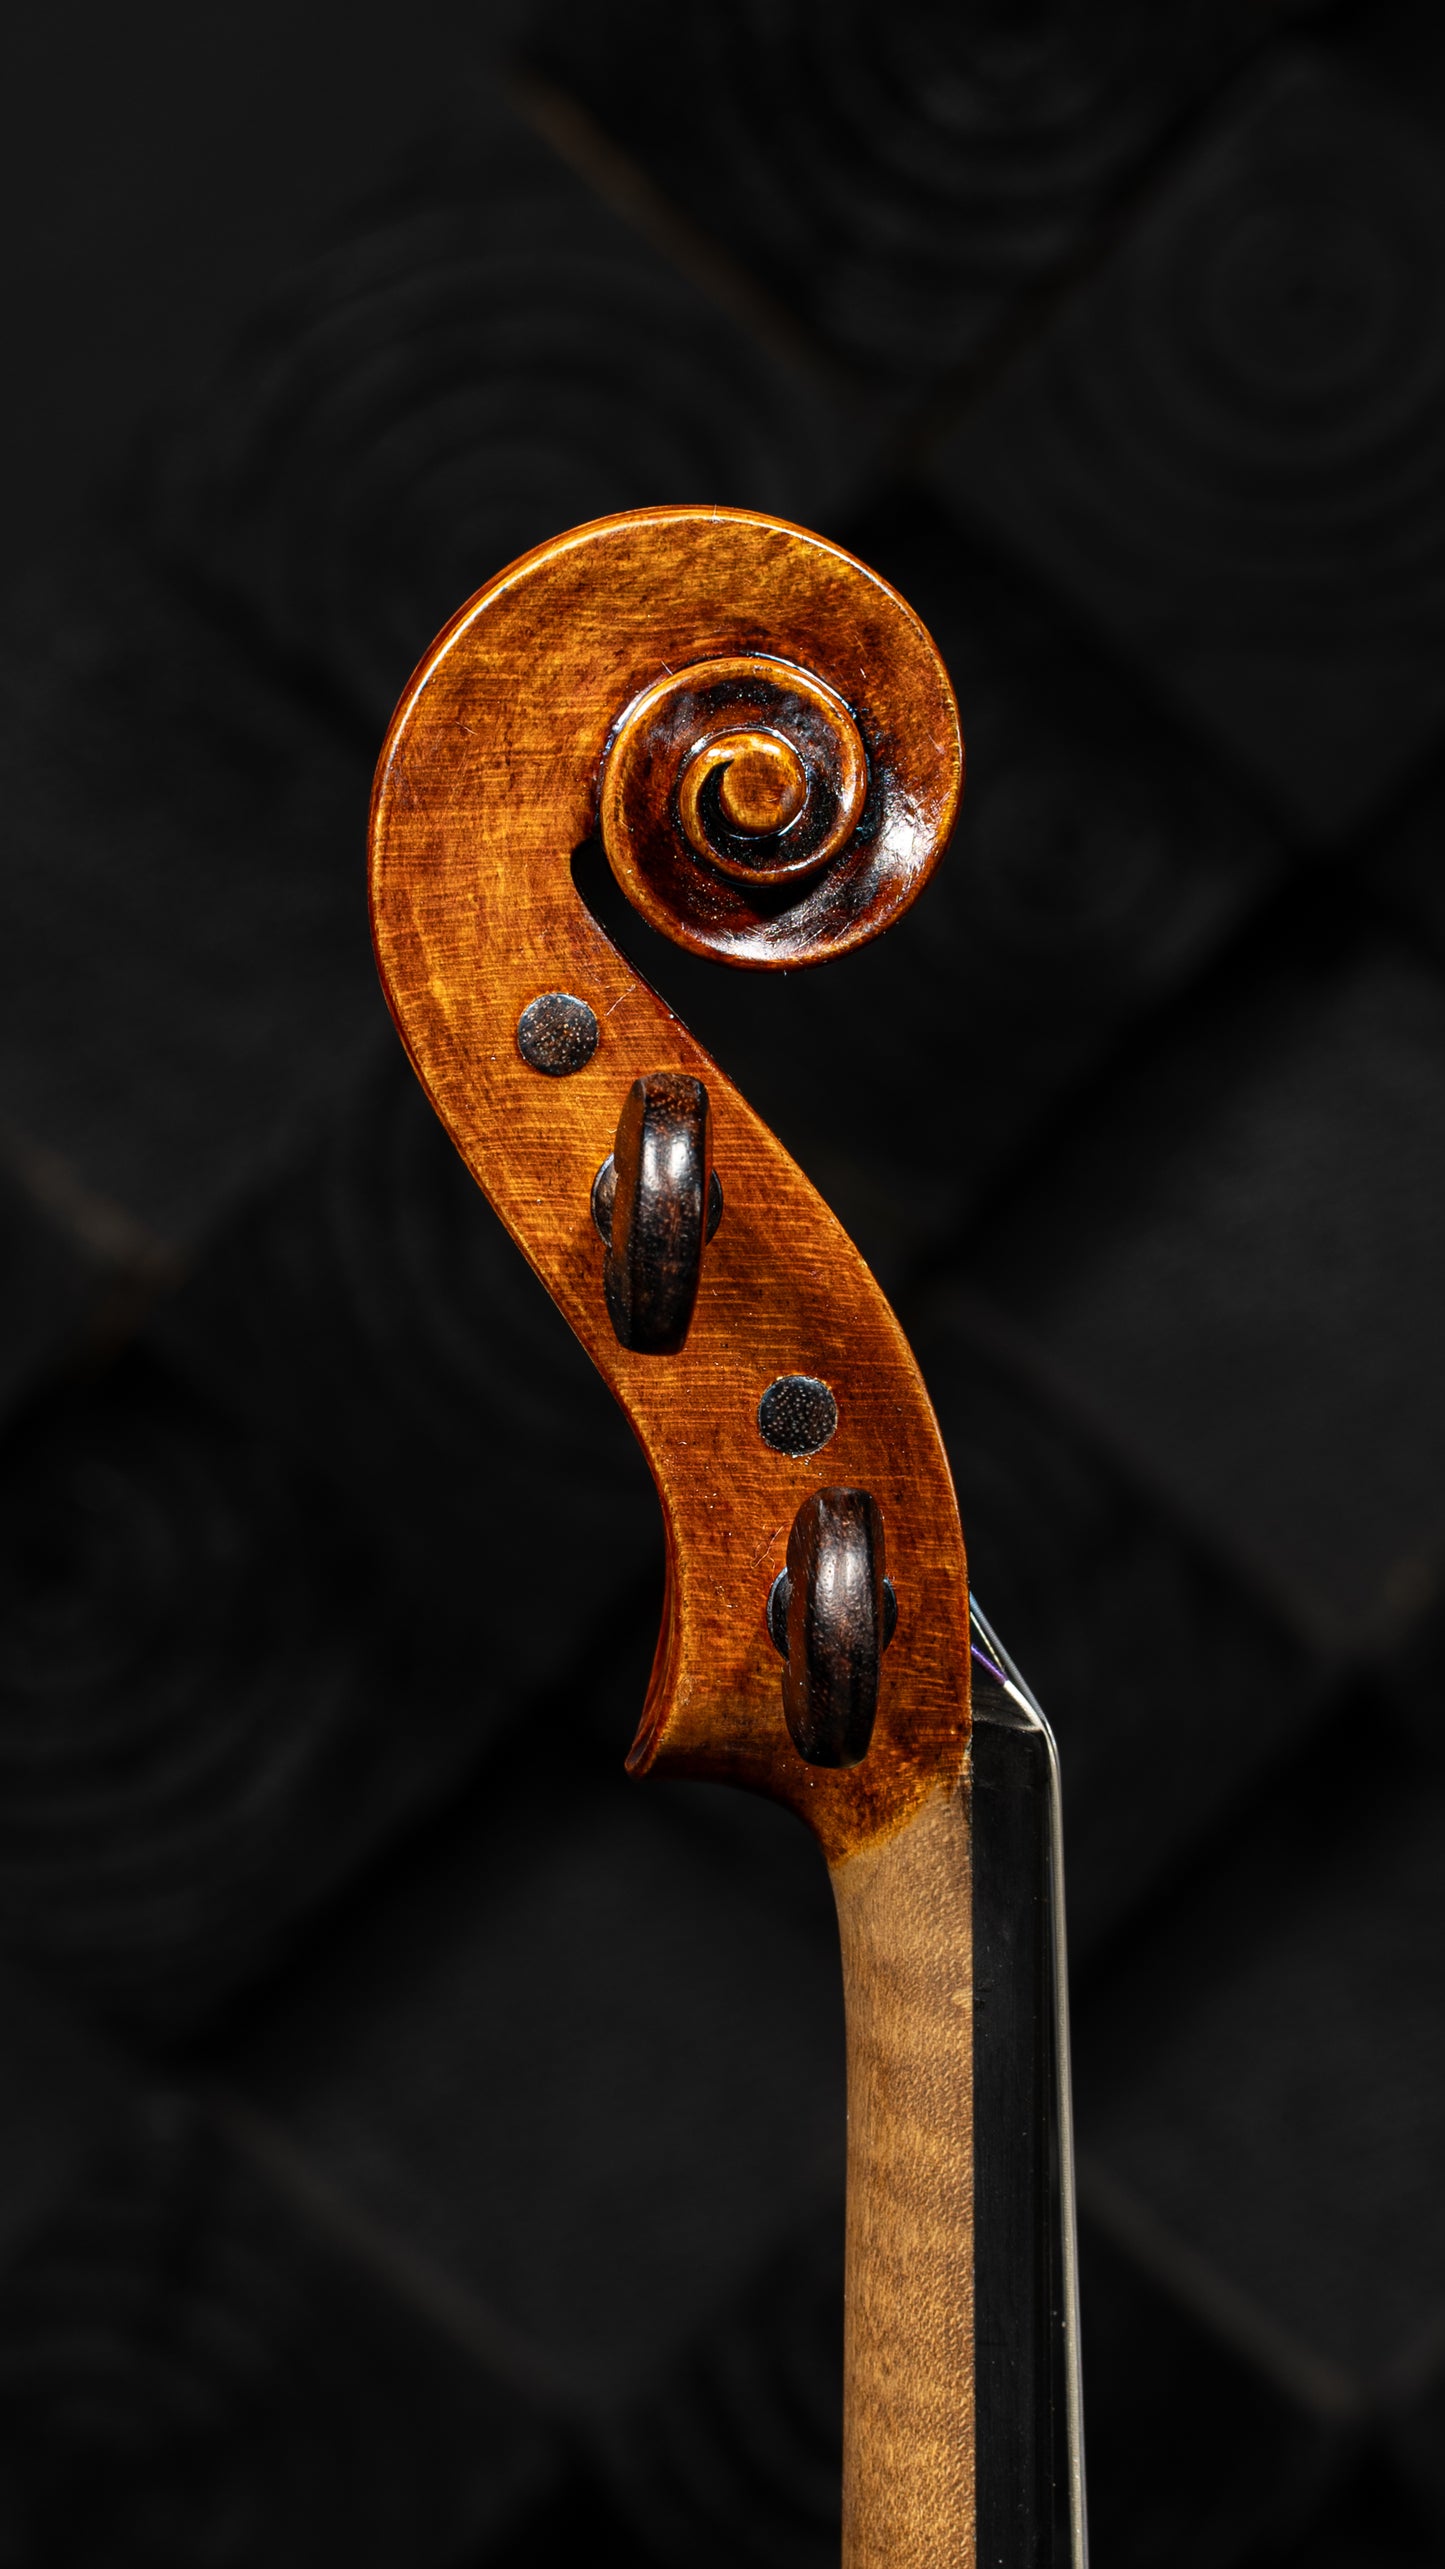 Kolstein Strad Copy Violin